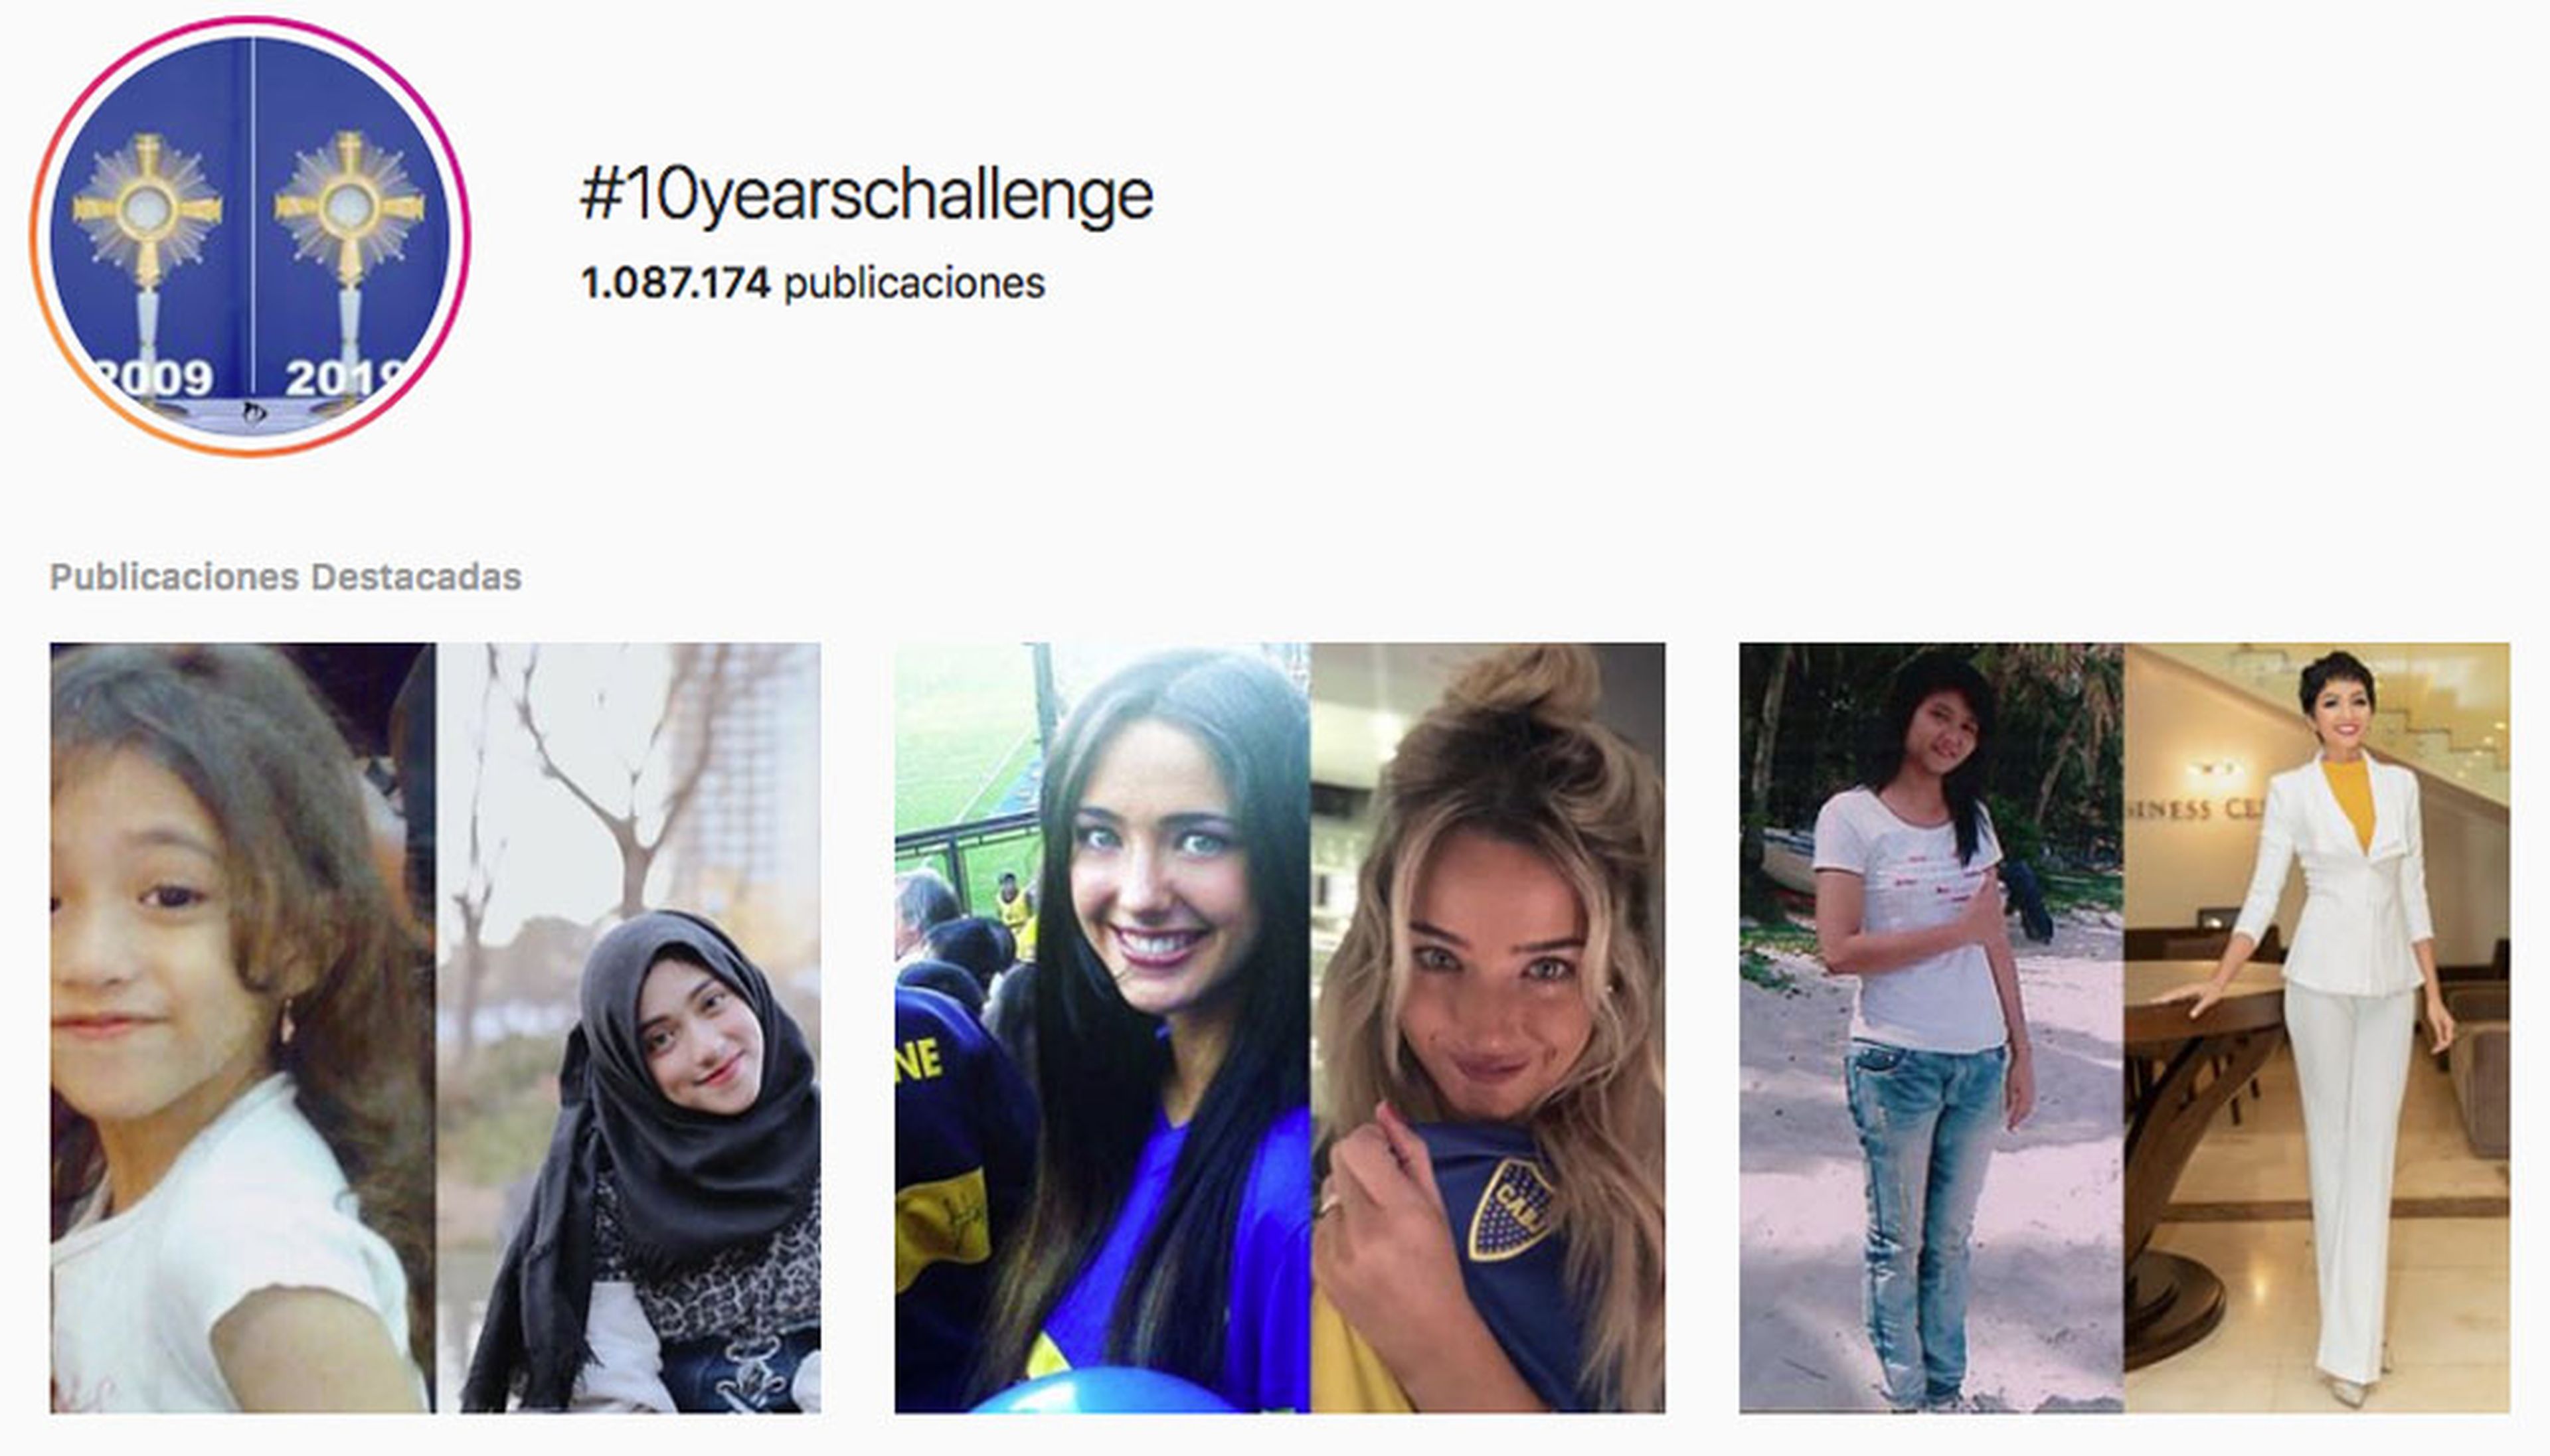 10 years challenge, el último reto viral de Instagram, Facebook y Twiiter